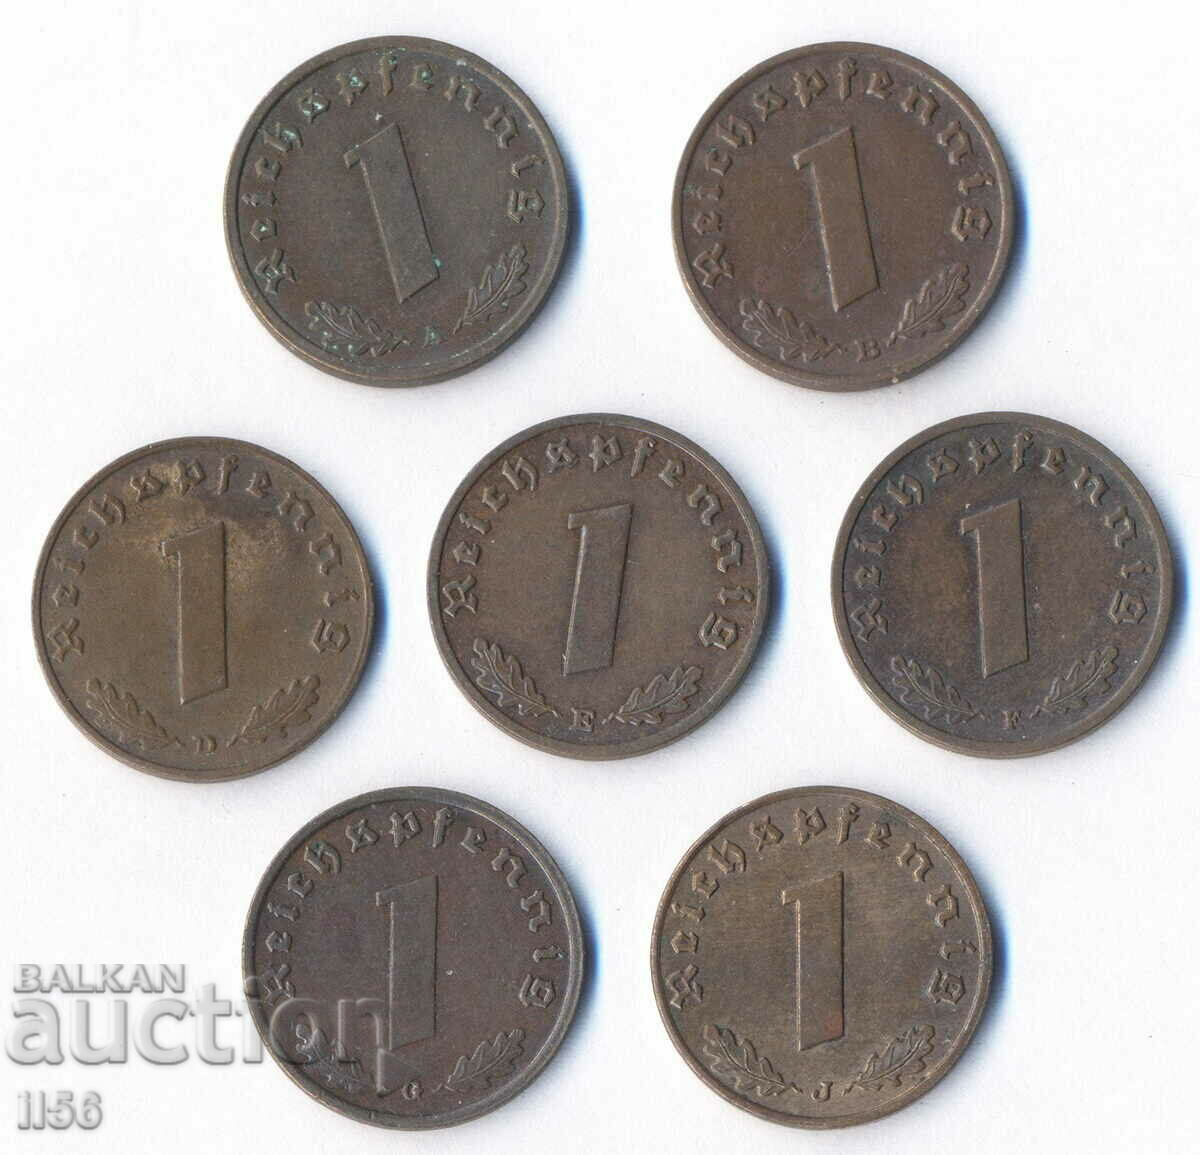 Germania - 1 pfenning 1939 - toate monetările